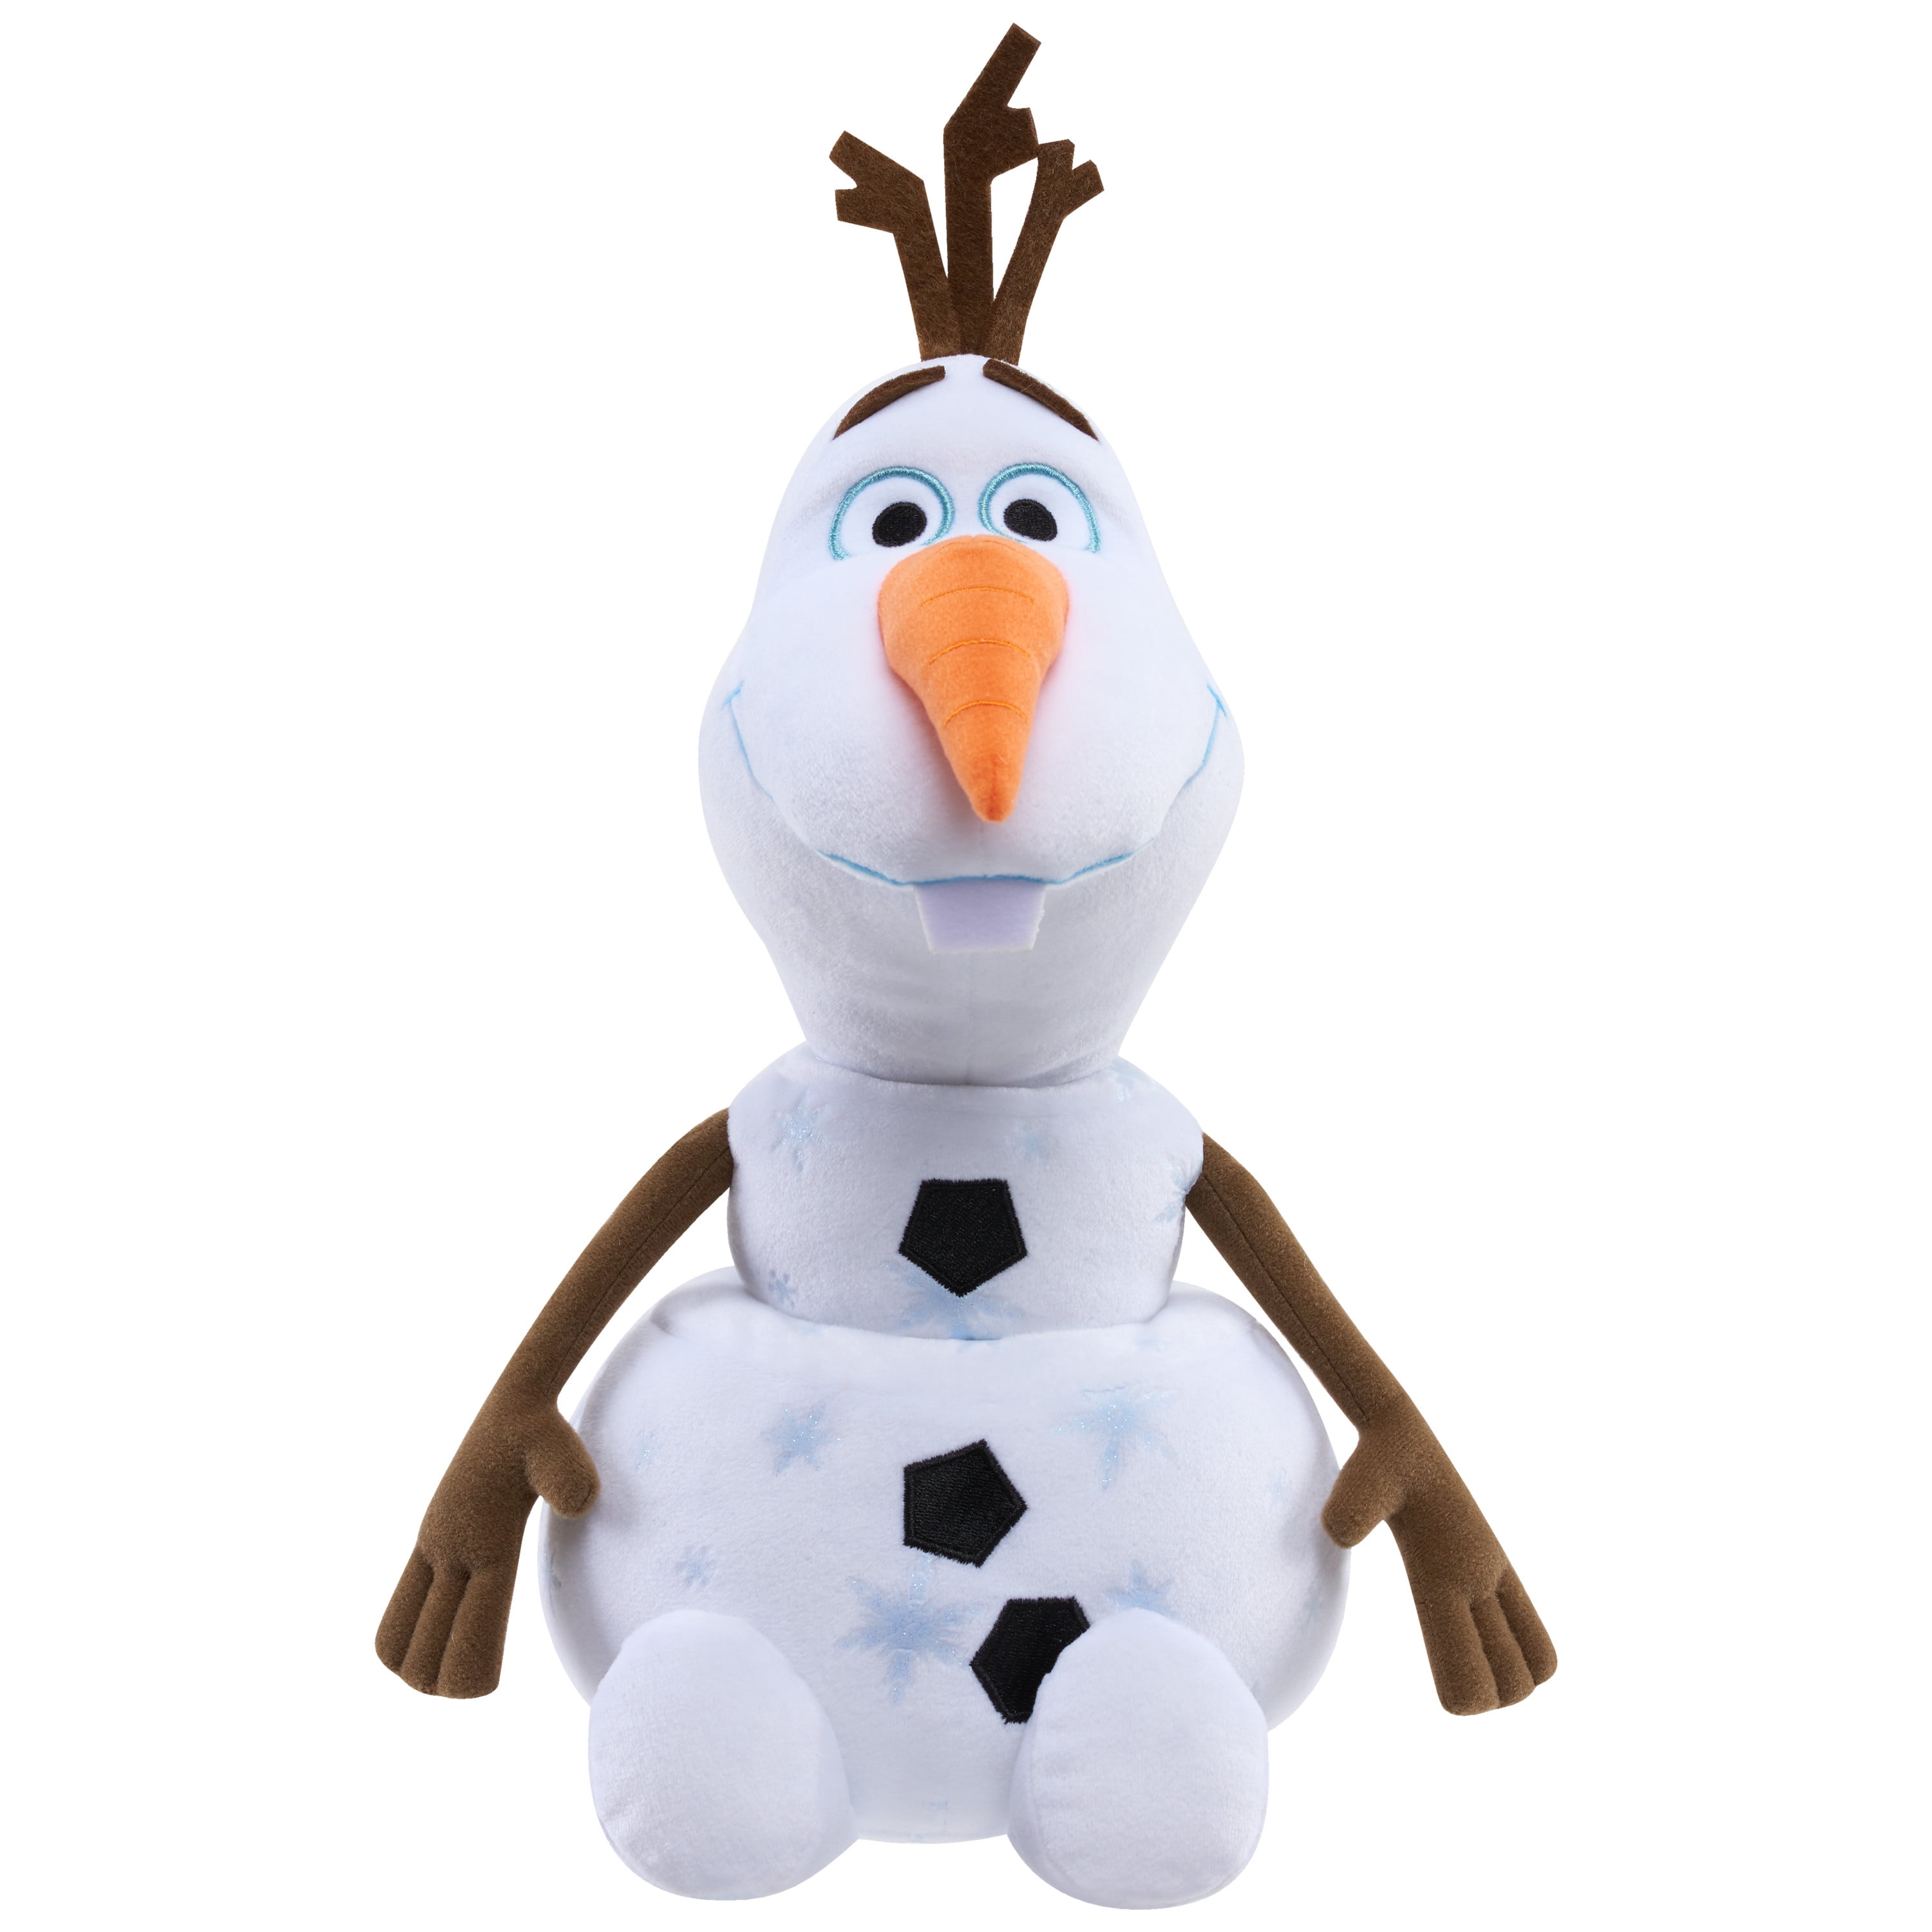 Disney's Frozen 2 Large Olaf Plush